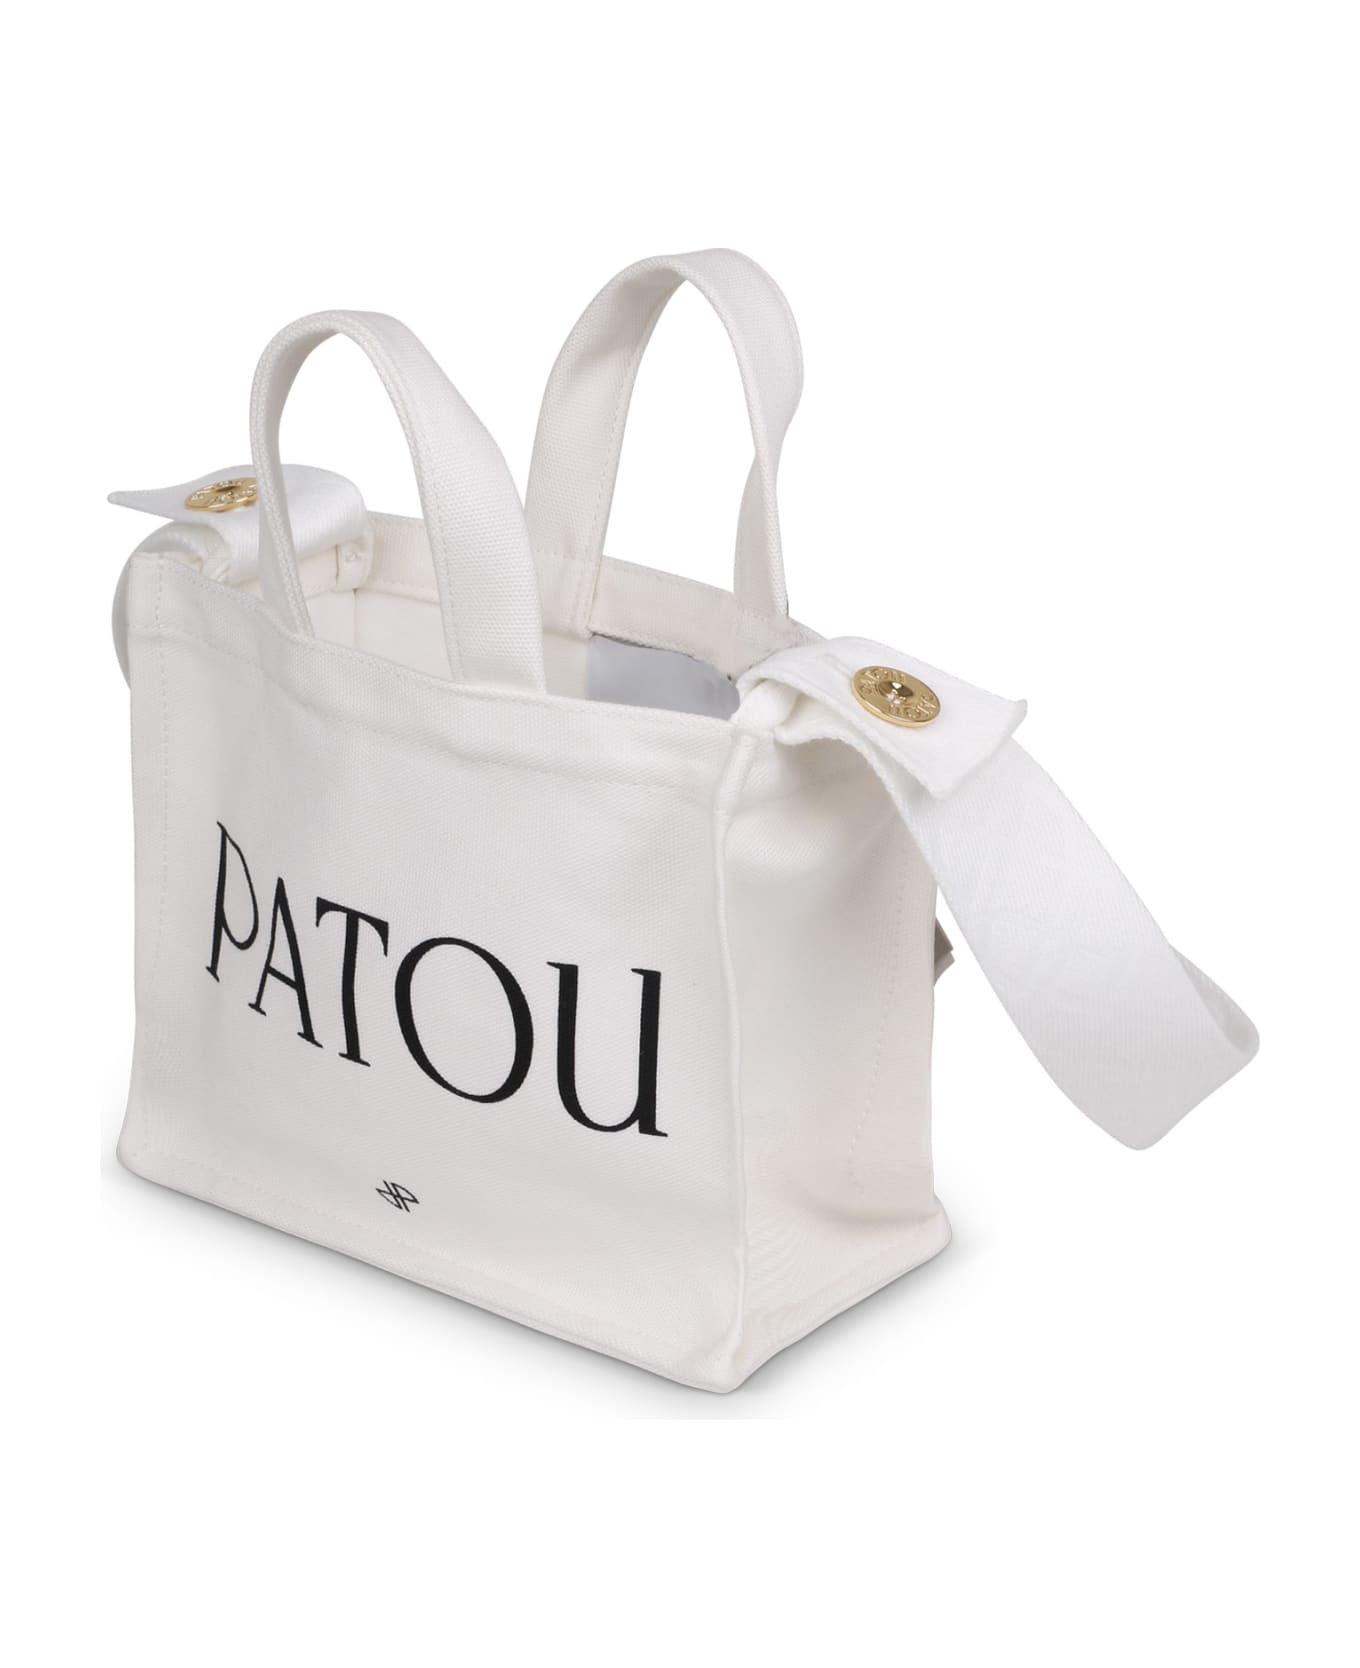 Patou Small Logo-print Tote Bag